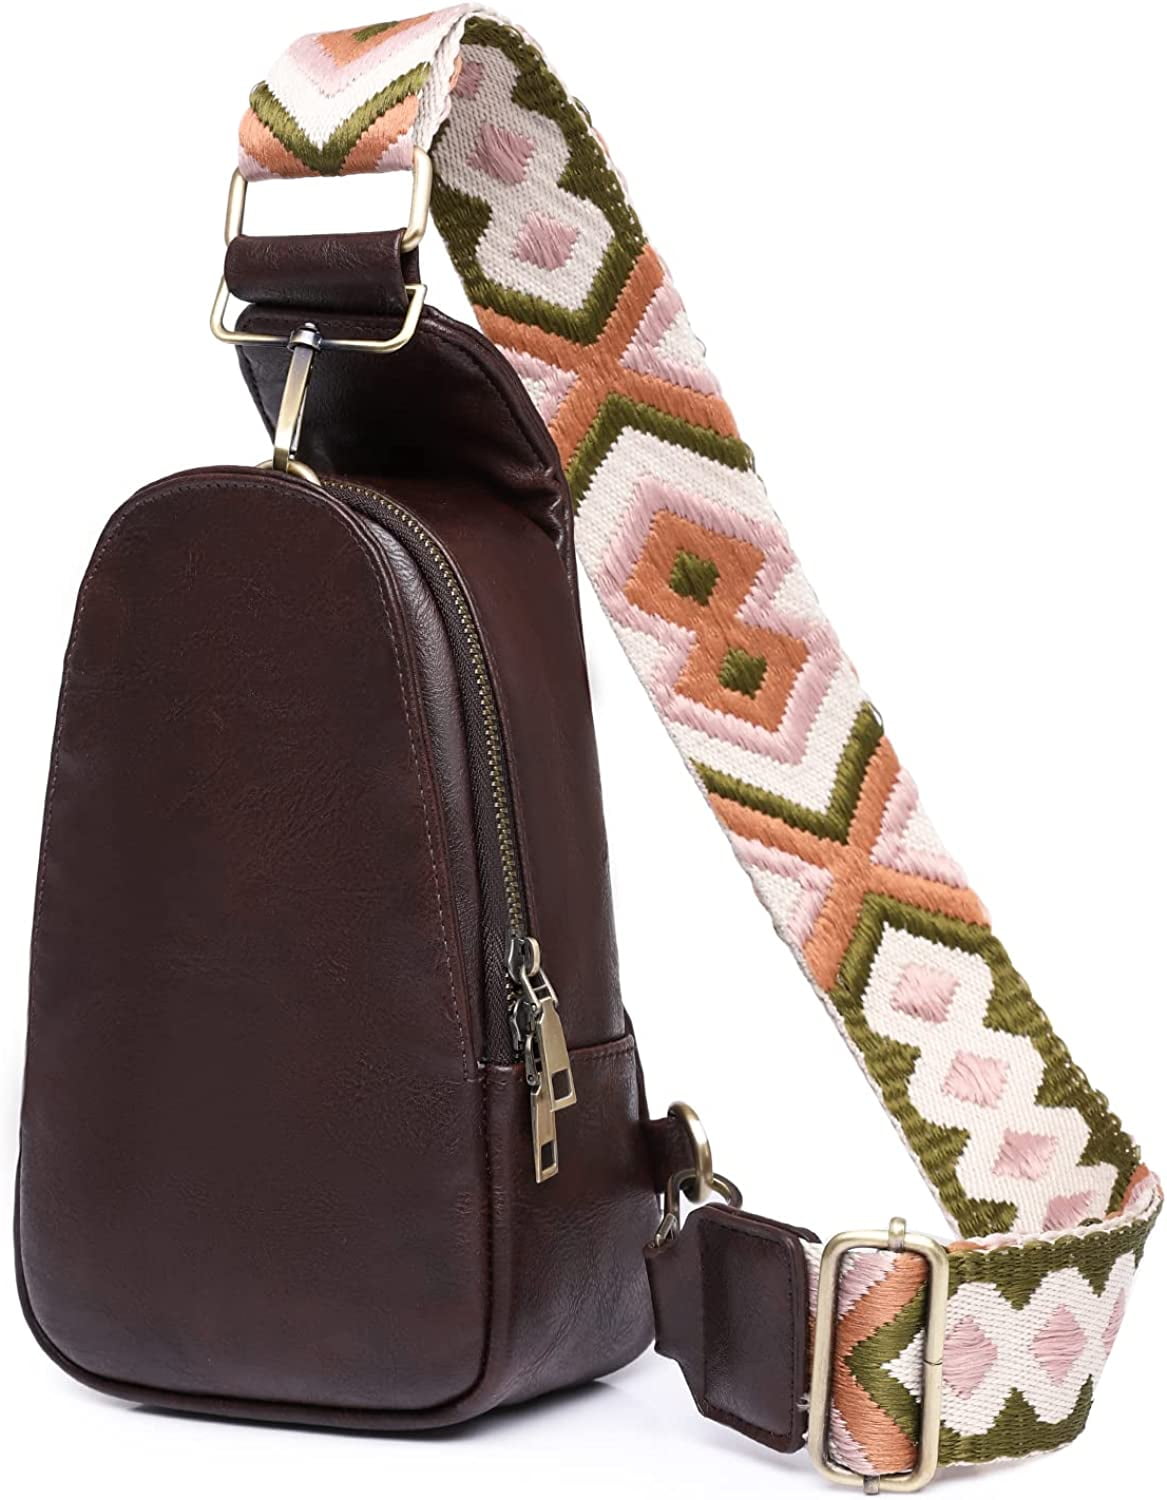 Shop Ibagbar Canvas Backpack Travel Bag Hikin – Luggage Factory